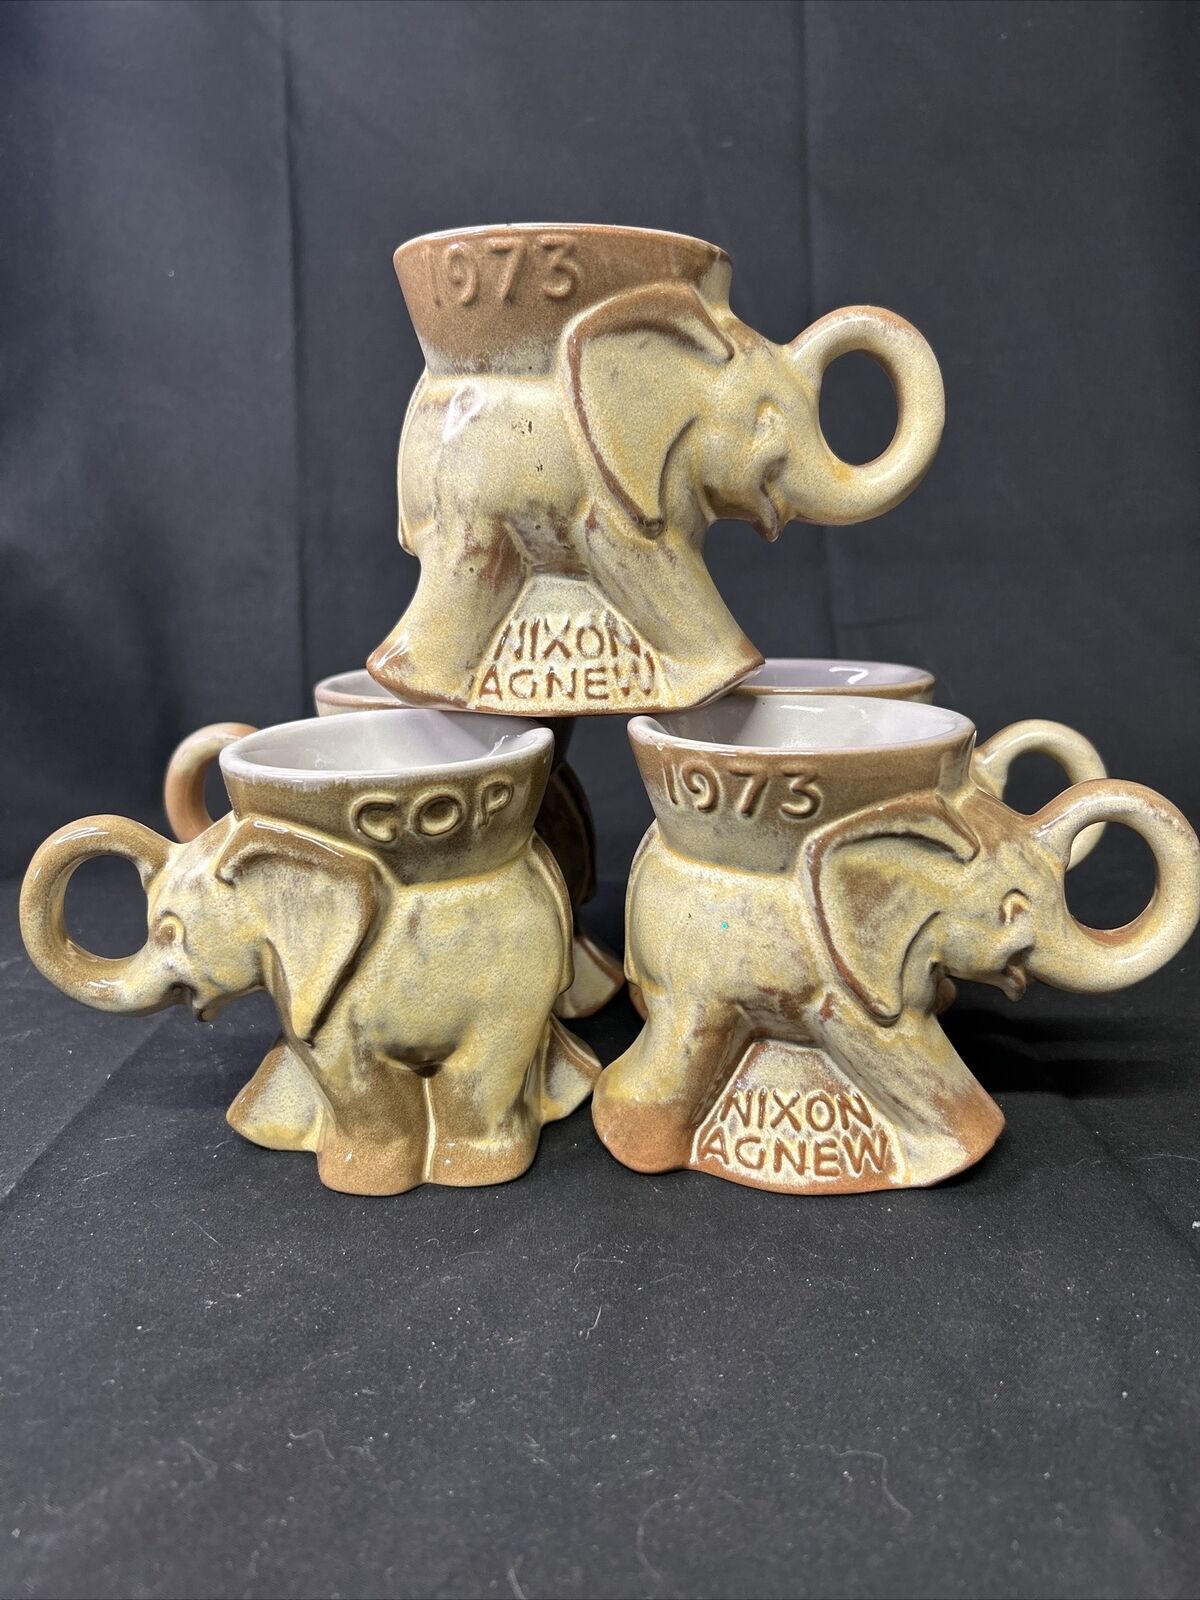 Vintage Frankoma Republican GOP Mugs Elephant Mugs 1973 Nixon Agnew Set Of 5